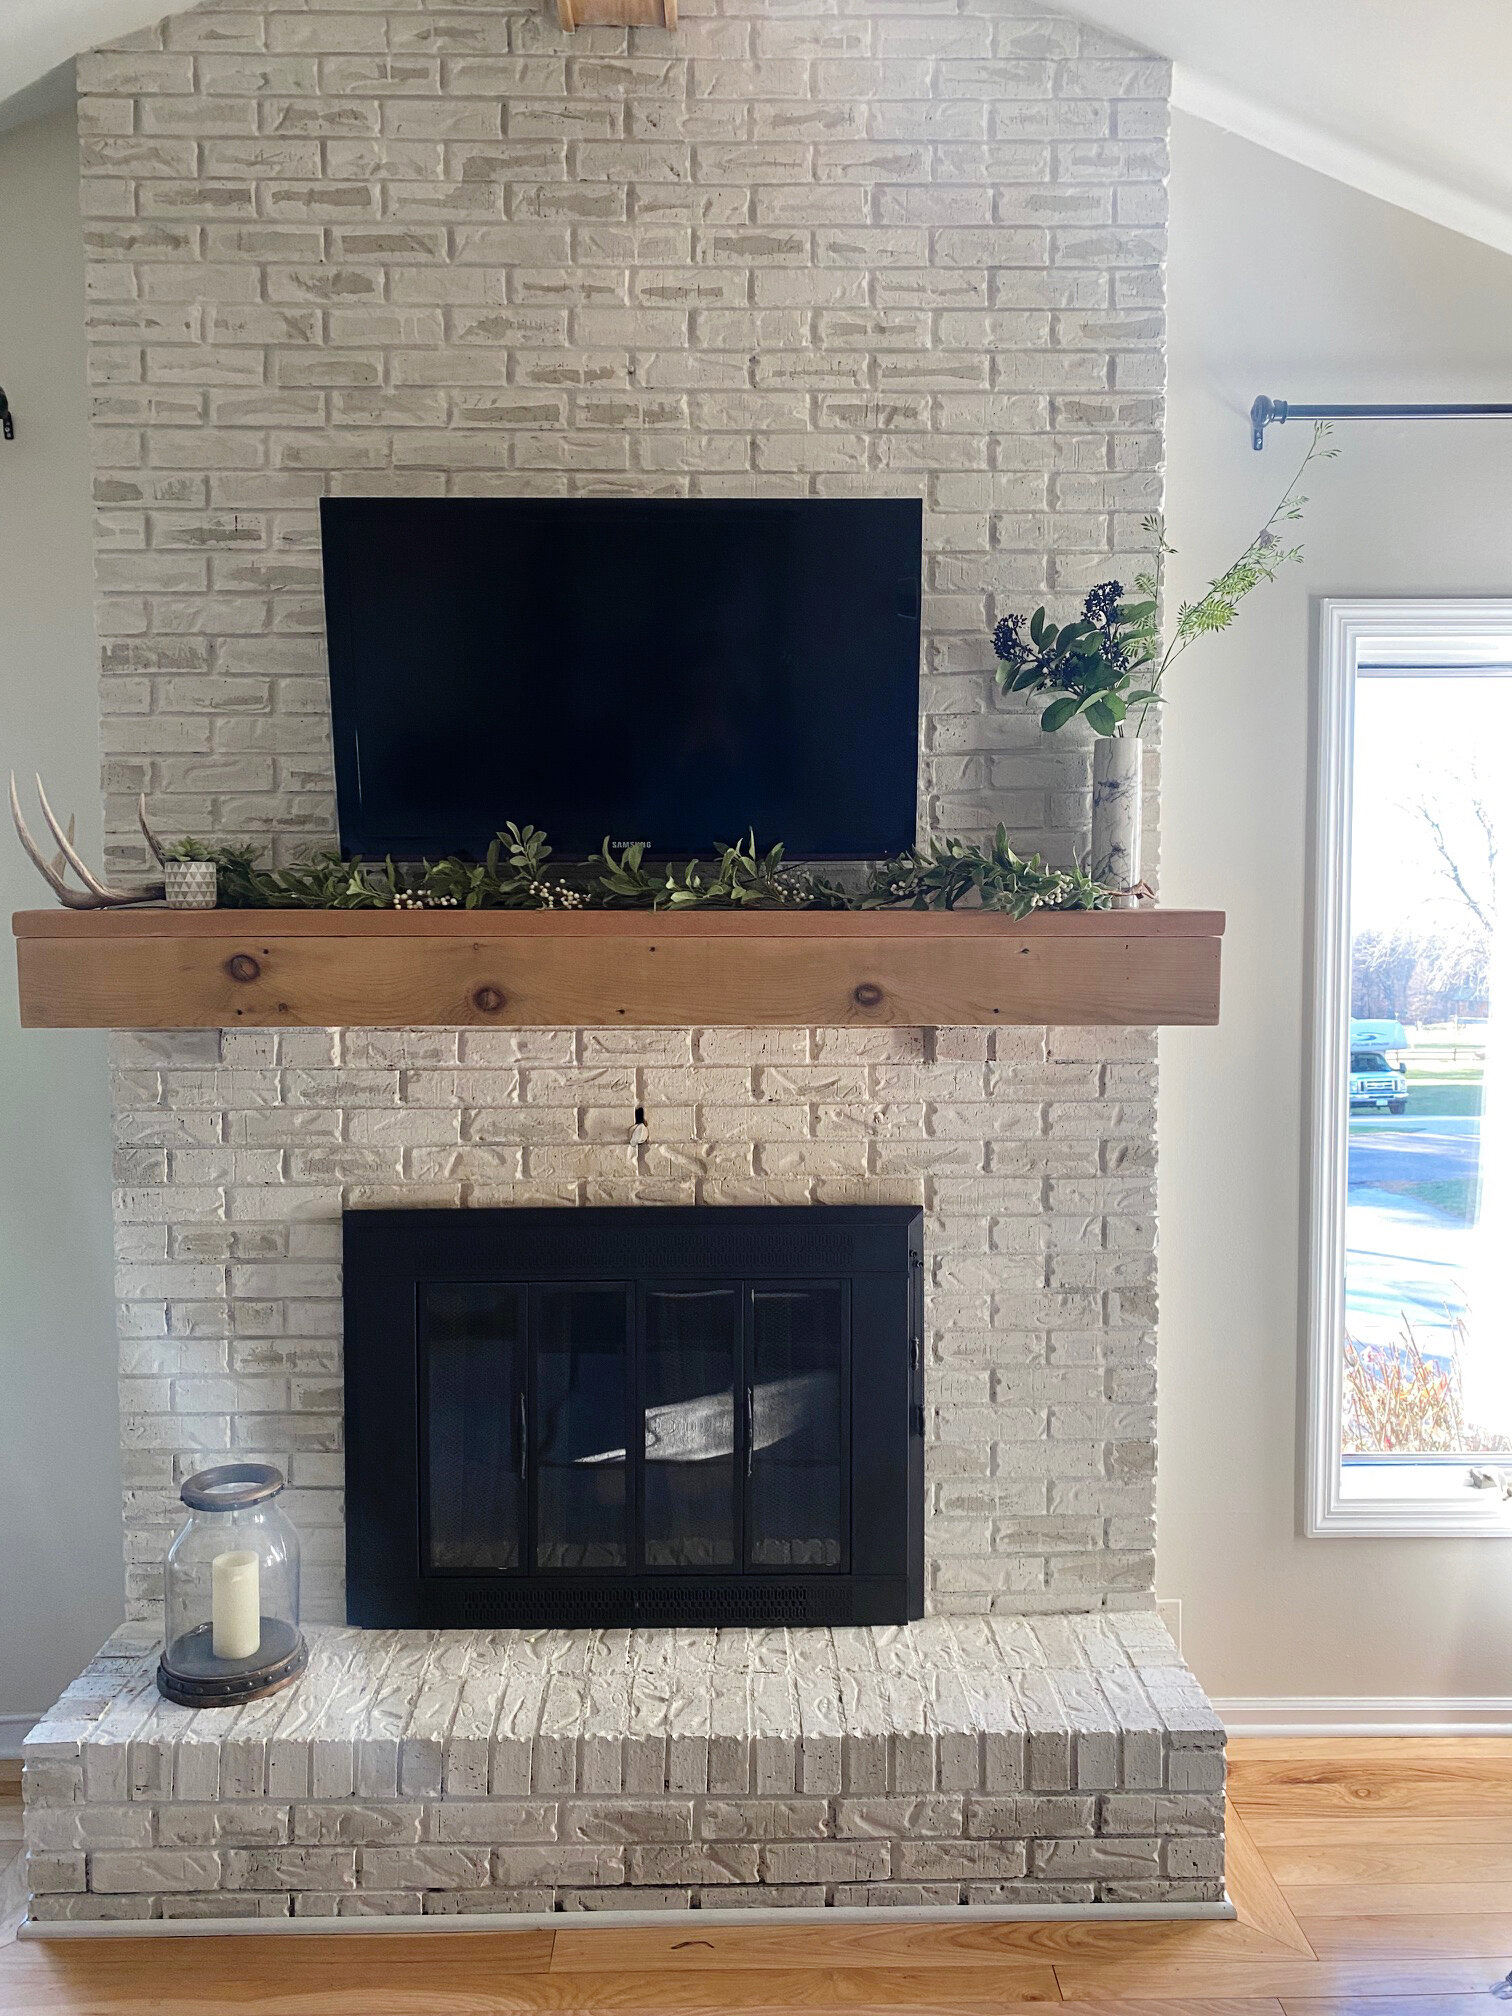 My Painted Brick Fireplace Diy Tutorial, Update My Brick Fireplace